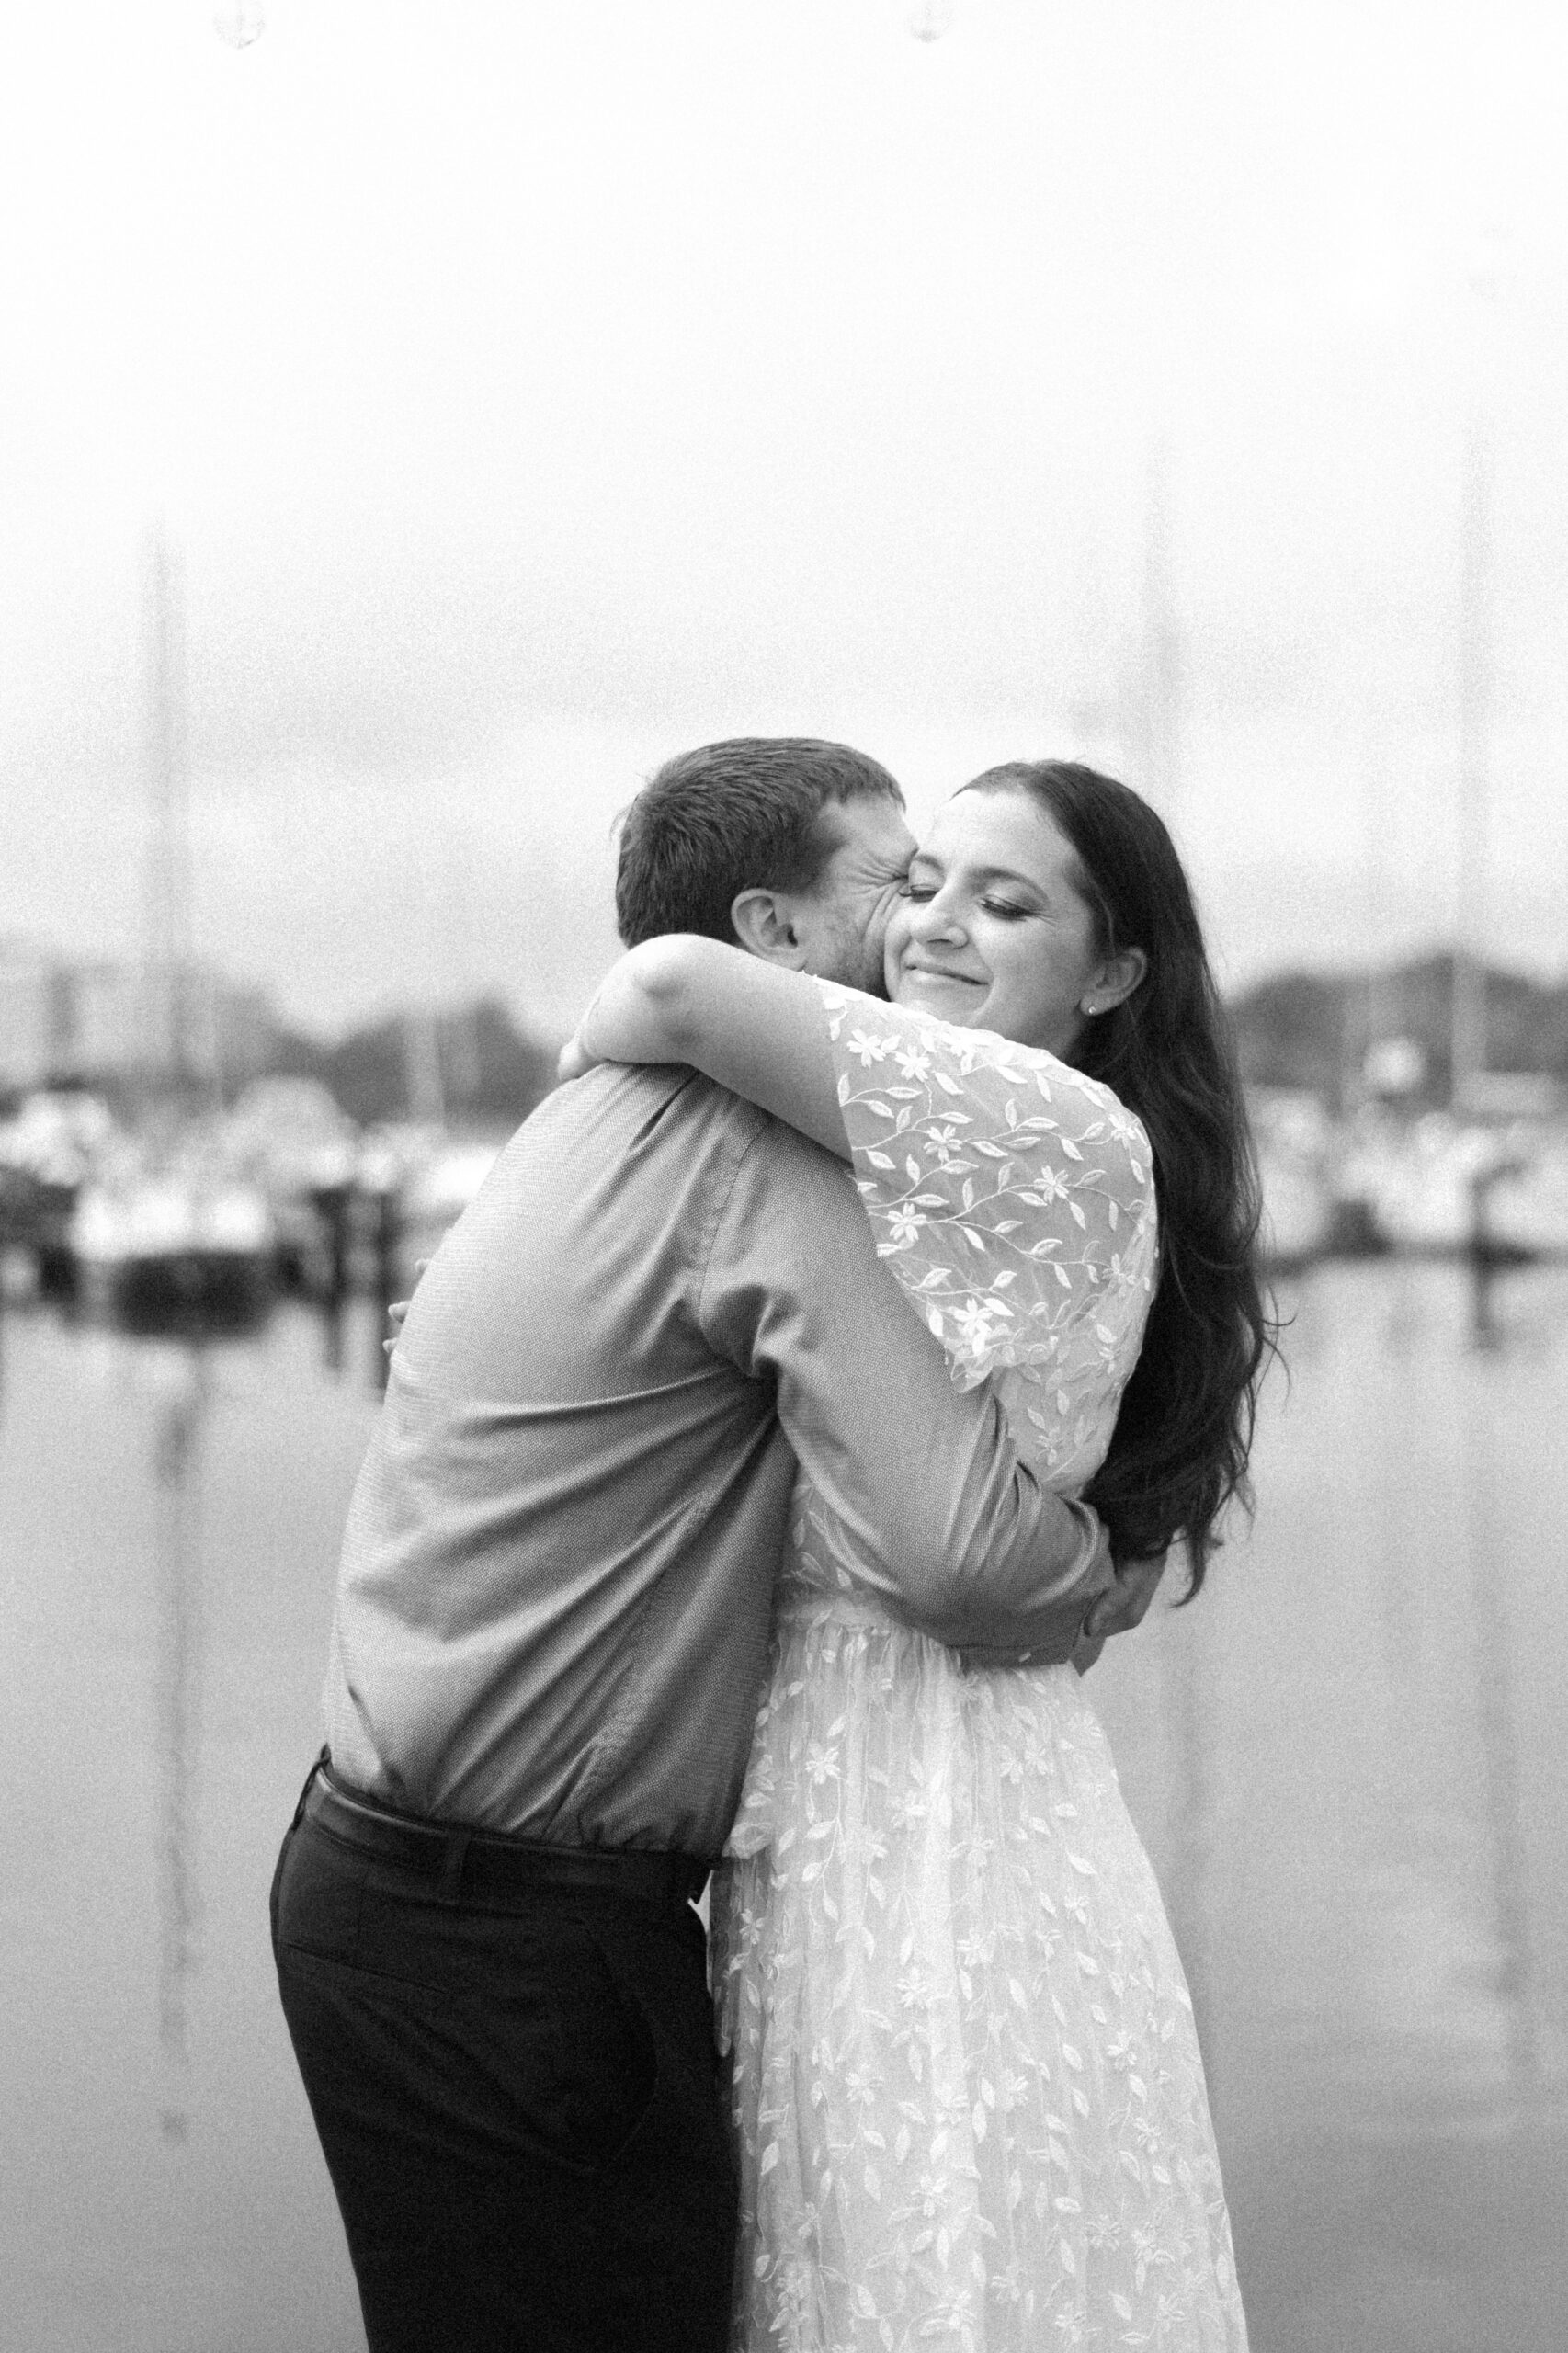 Pennsylvania wedding photographer captures black and white portrait of couple hugging during rainy engagement portraits